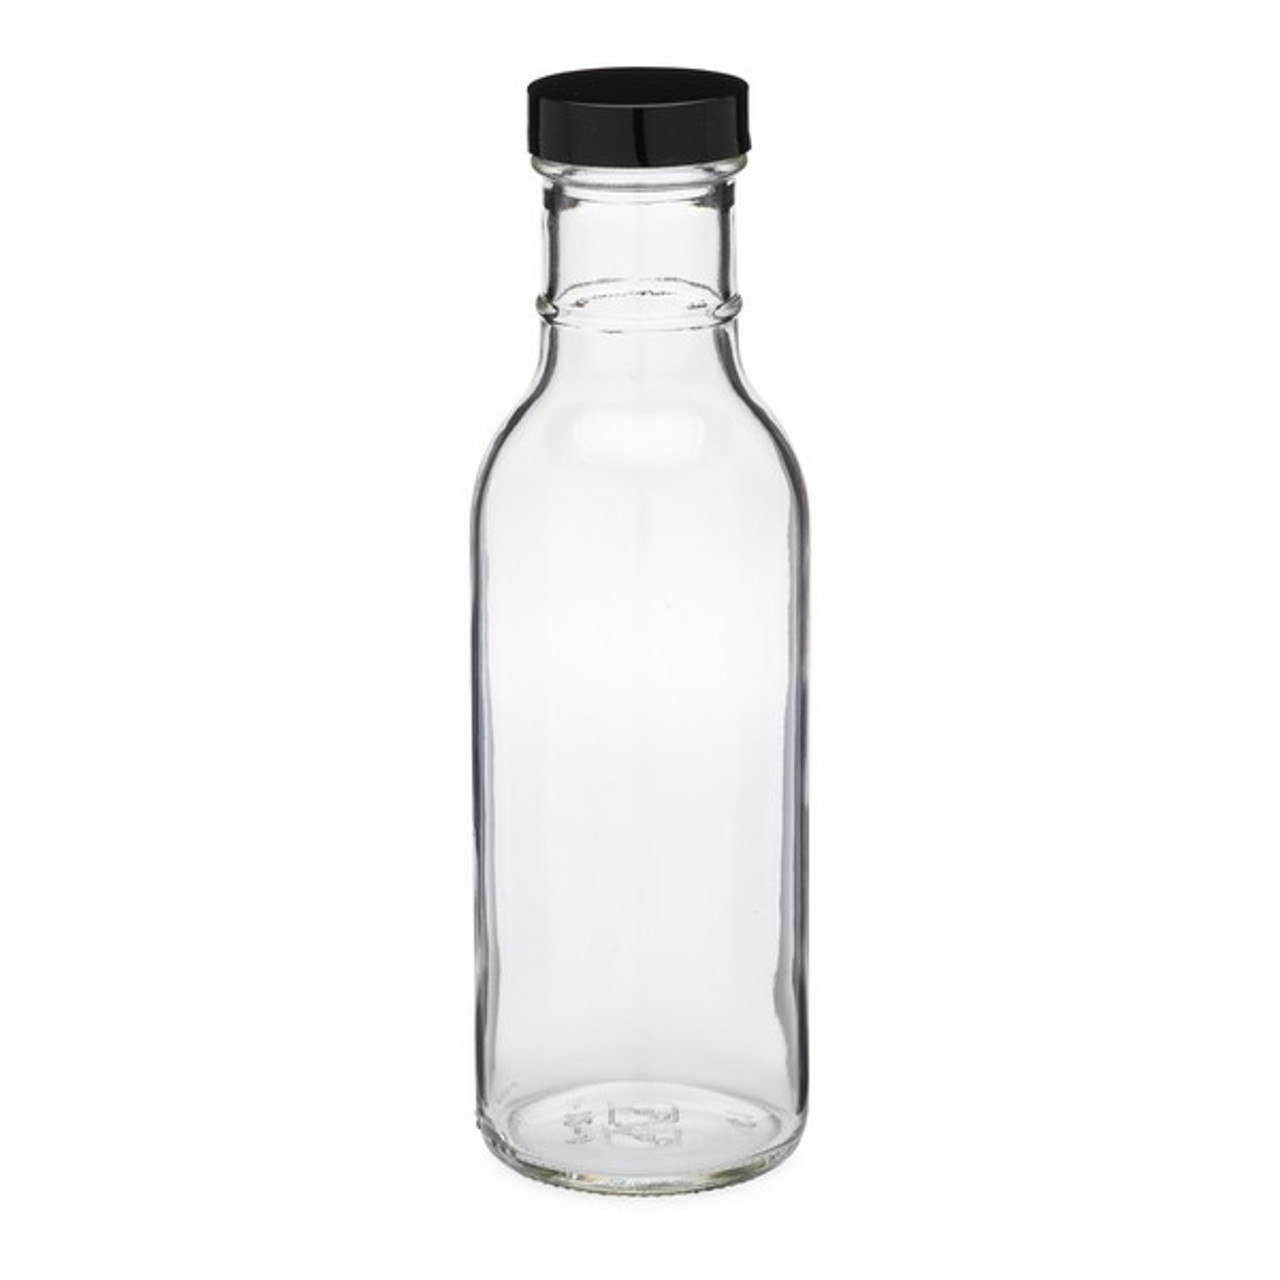 12 oz Clear Glass Bottles